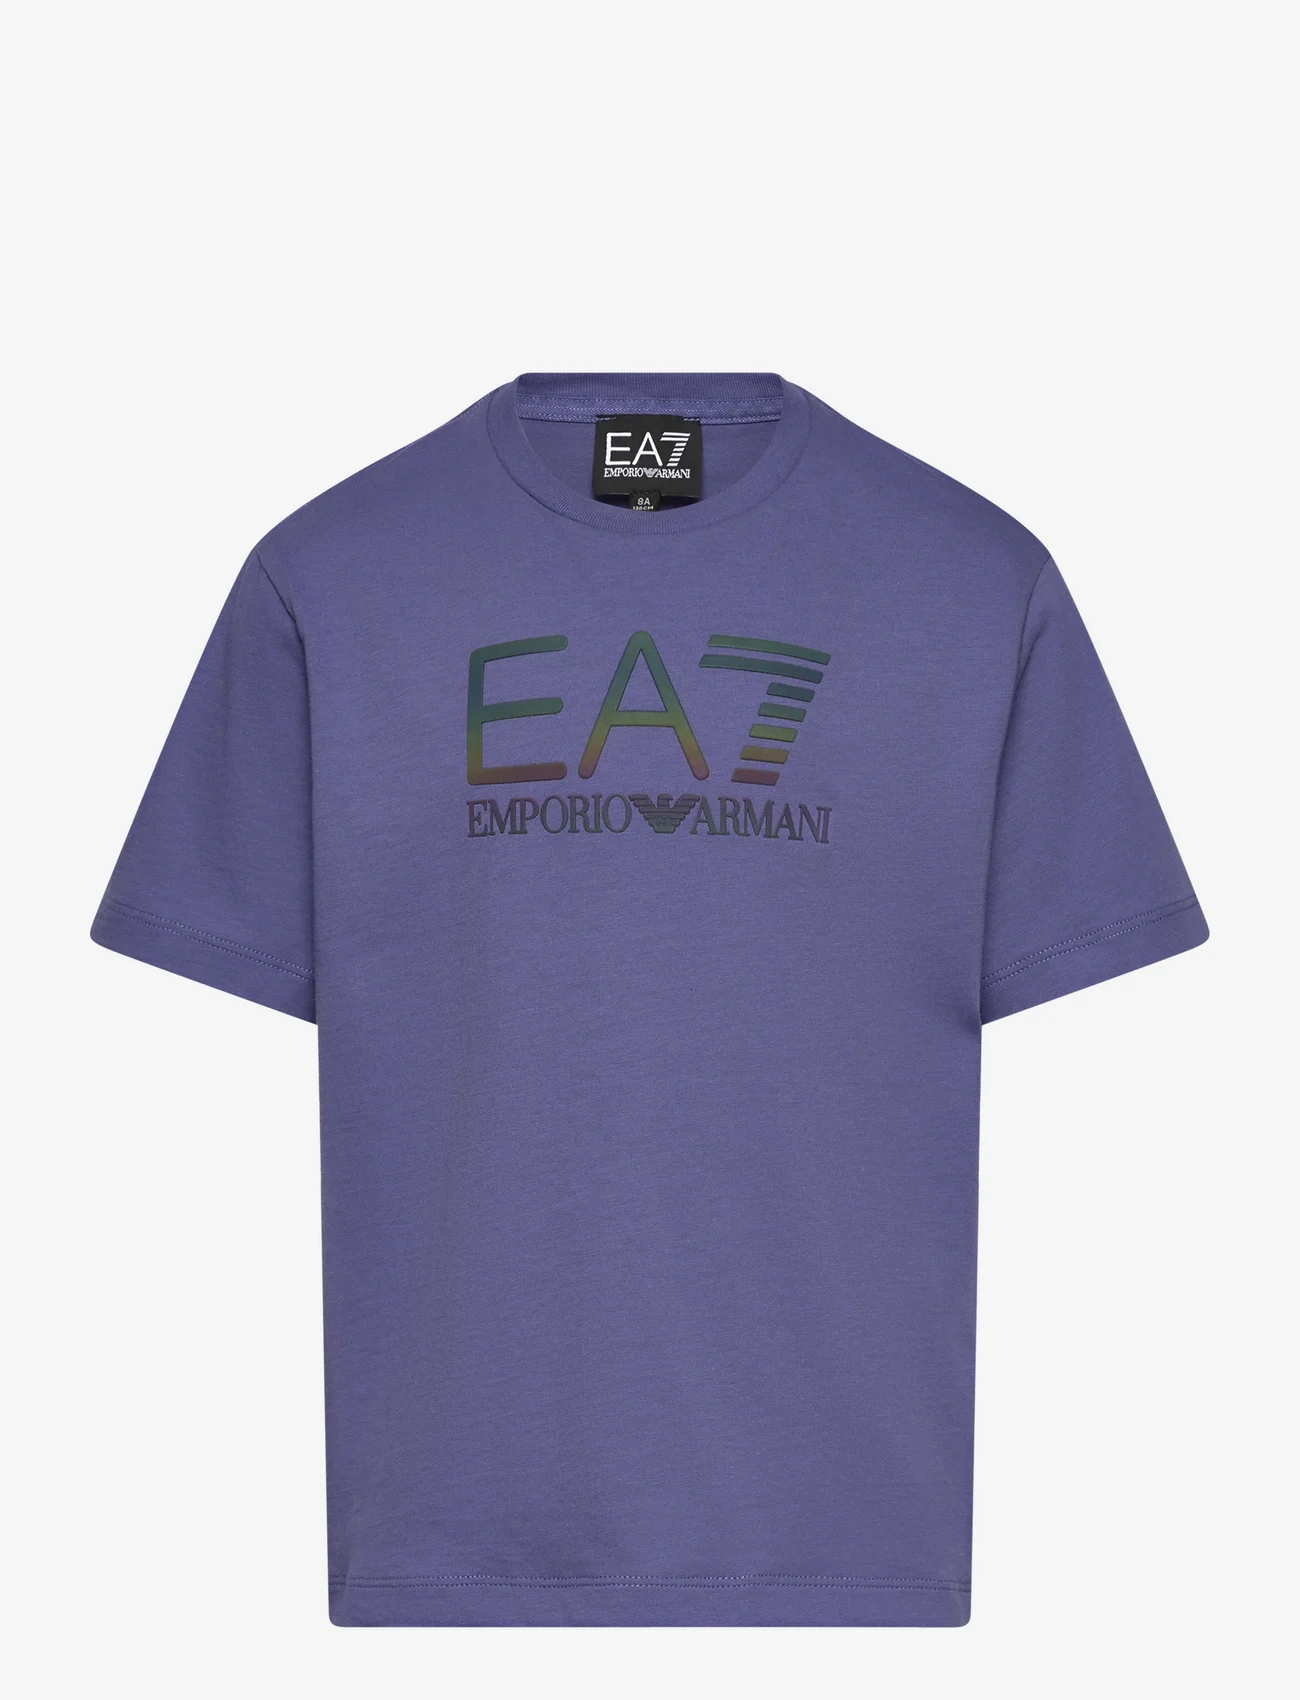 EA7 - T-SHIRT - kortermede t-skjorter - 1557-marlin - 0